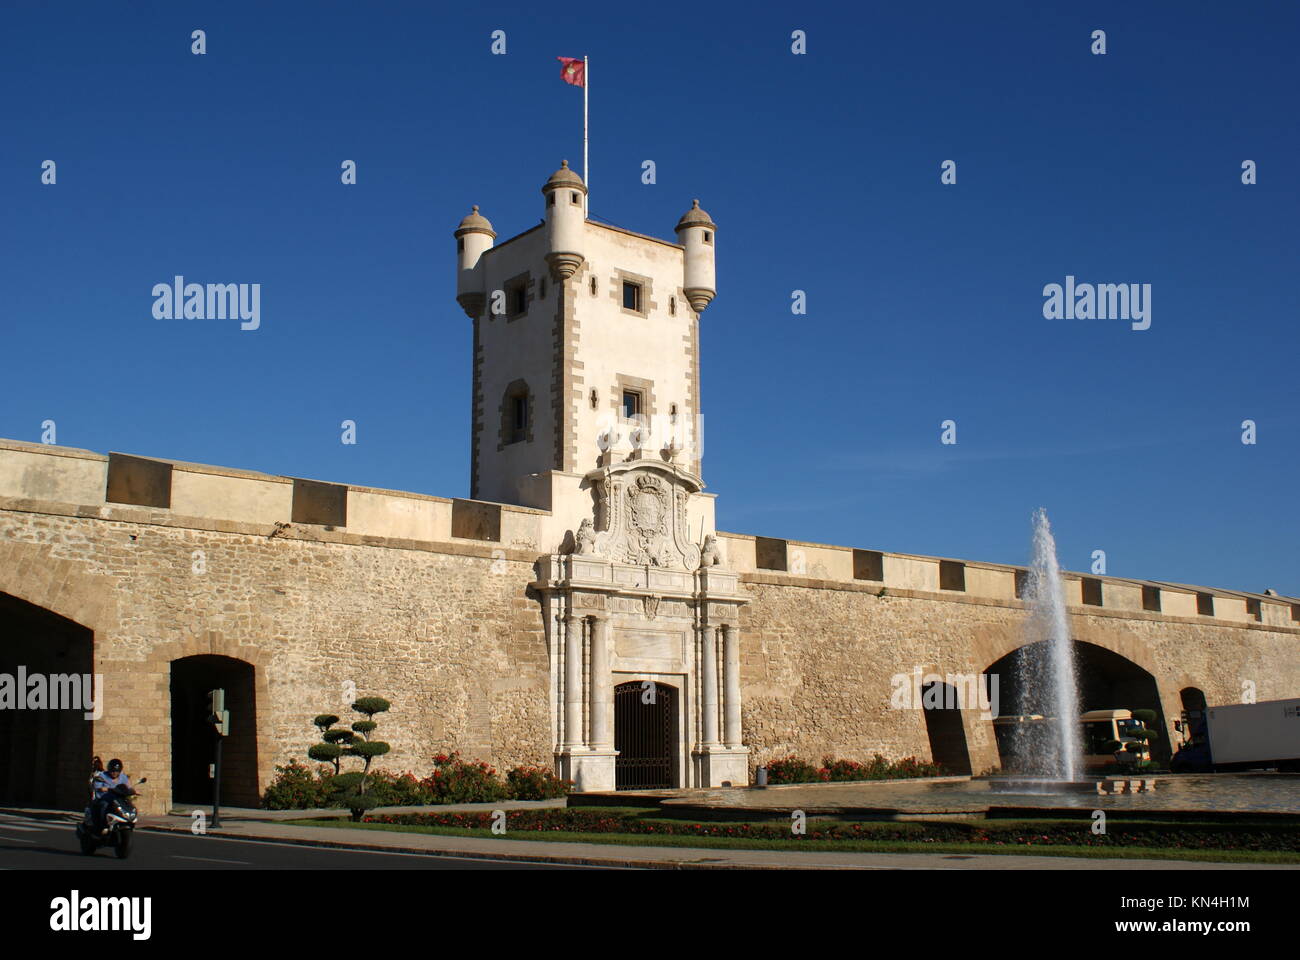 Puertas de Tierra (city gates), Cadiz, Spain Stock Photo